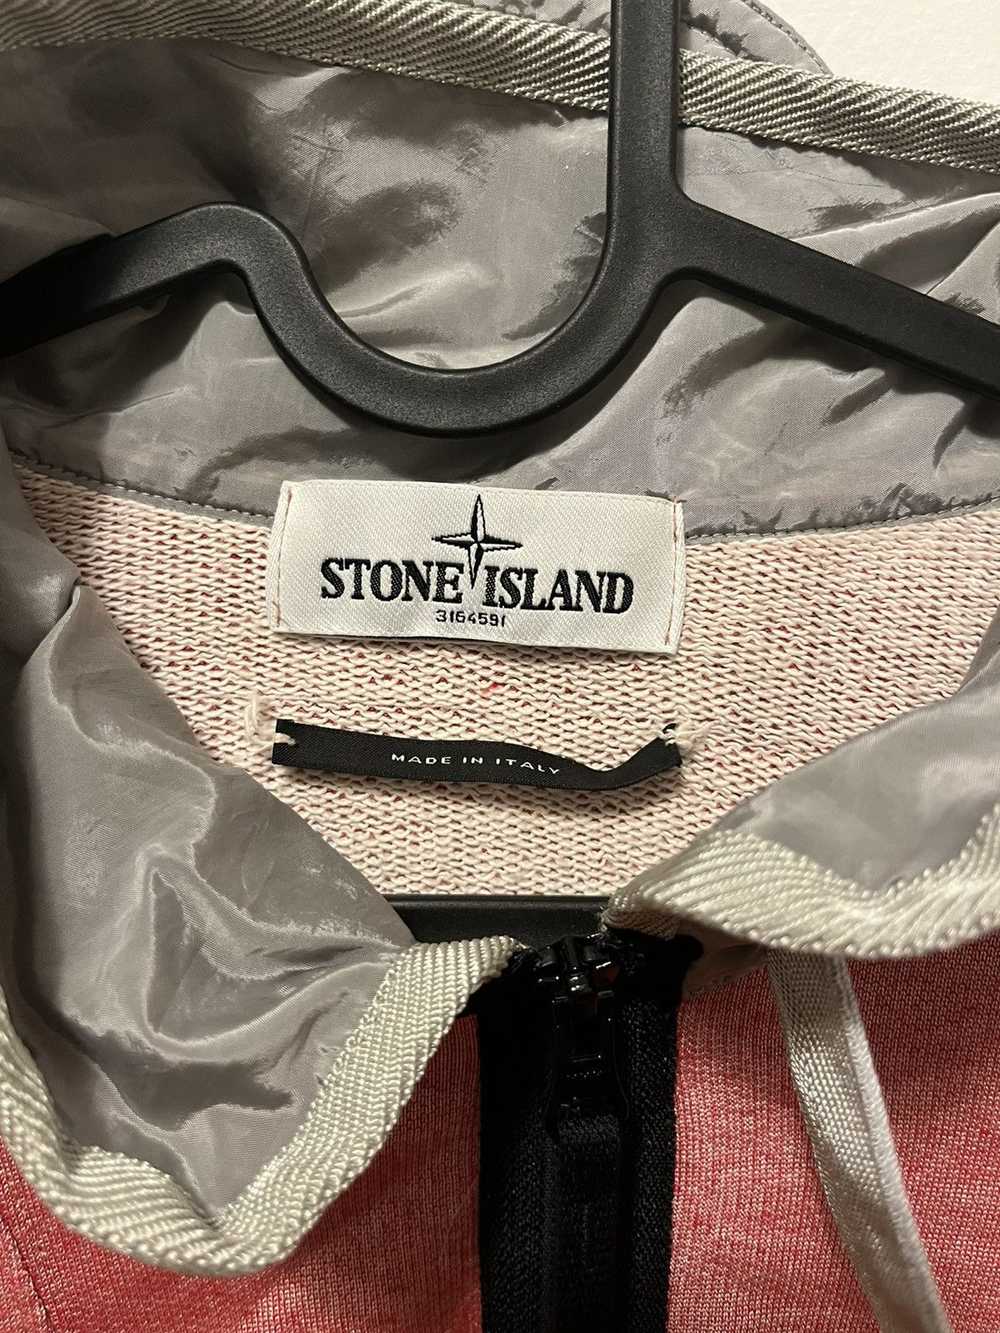 Stone Island Stone Island hoodie - image 3